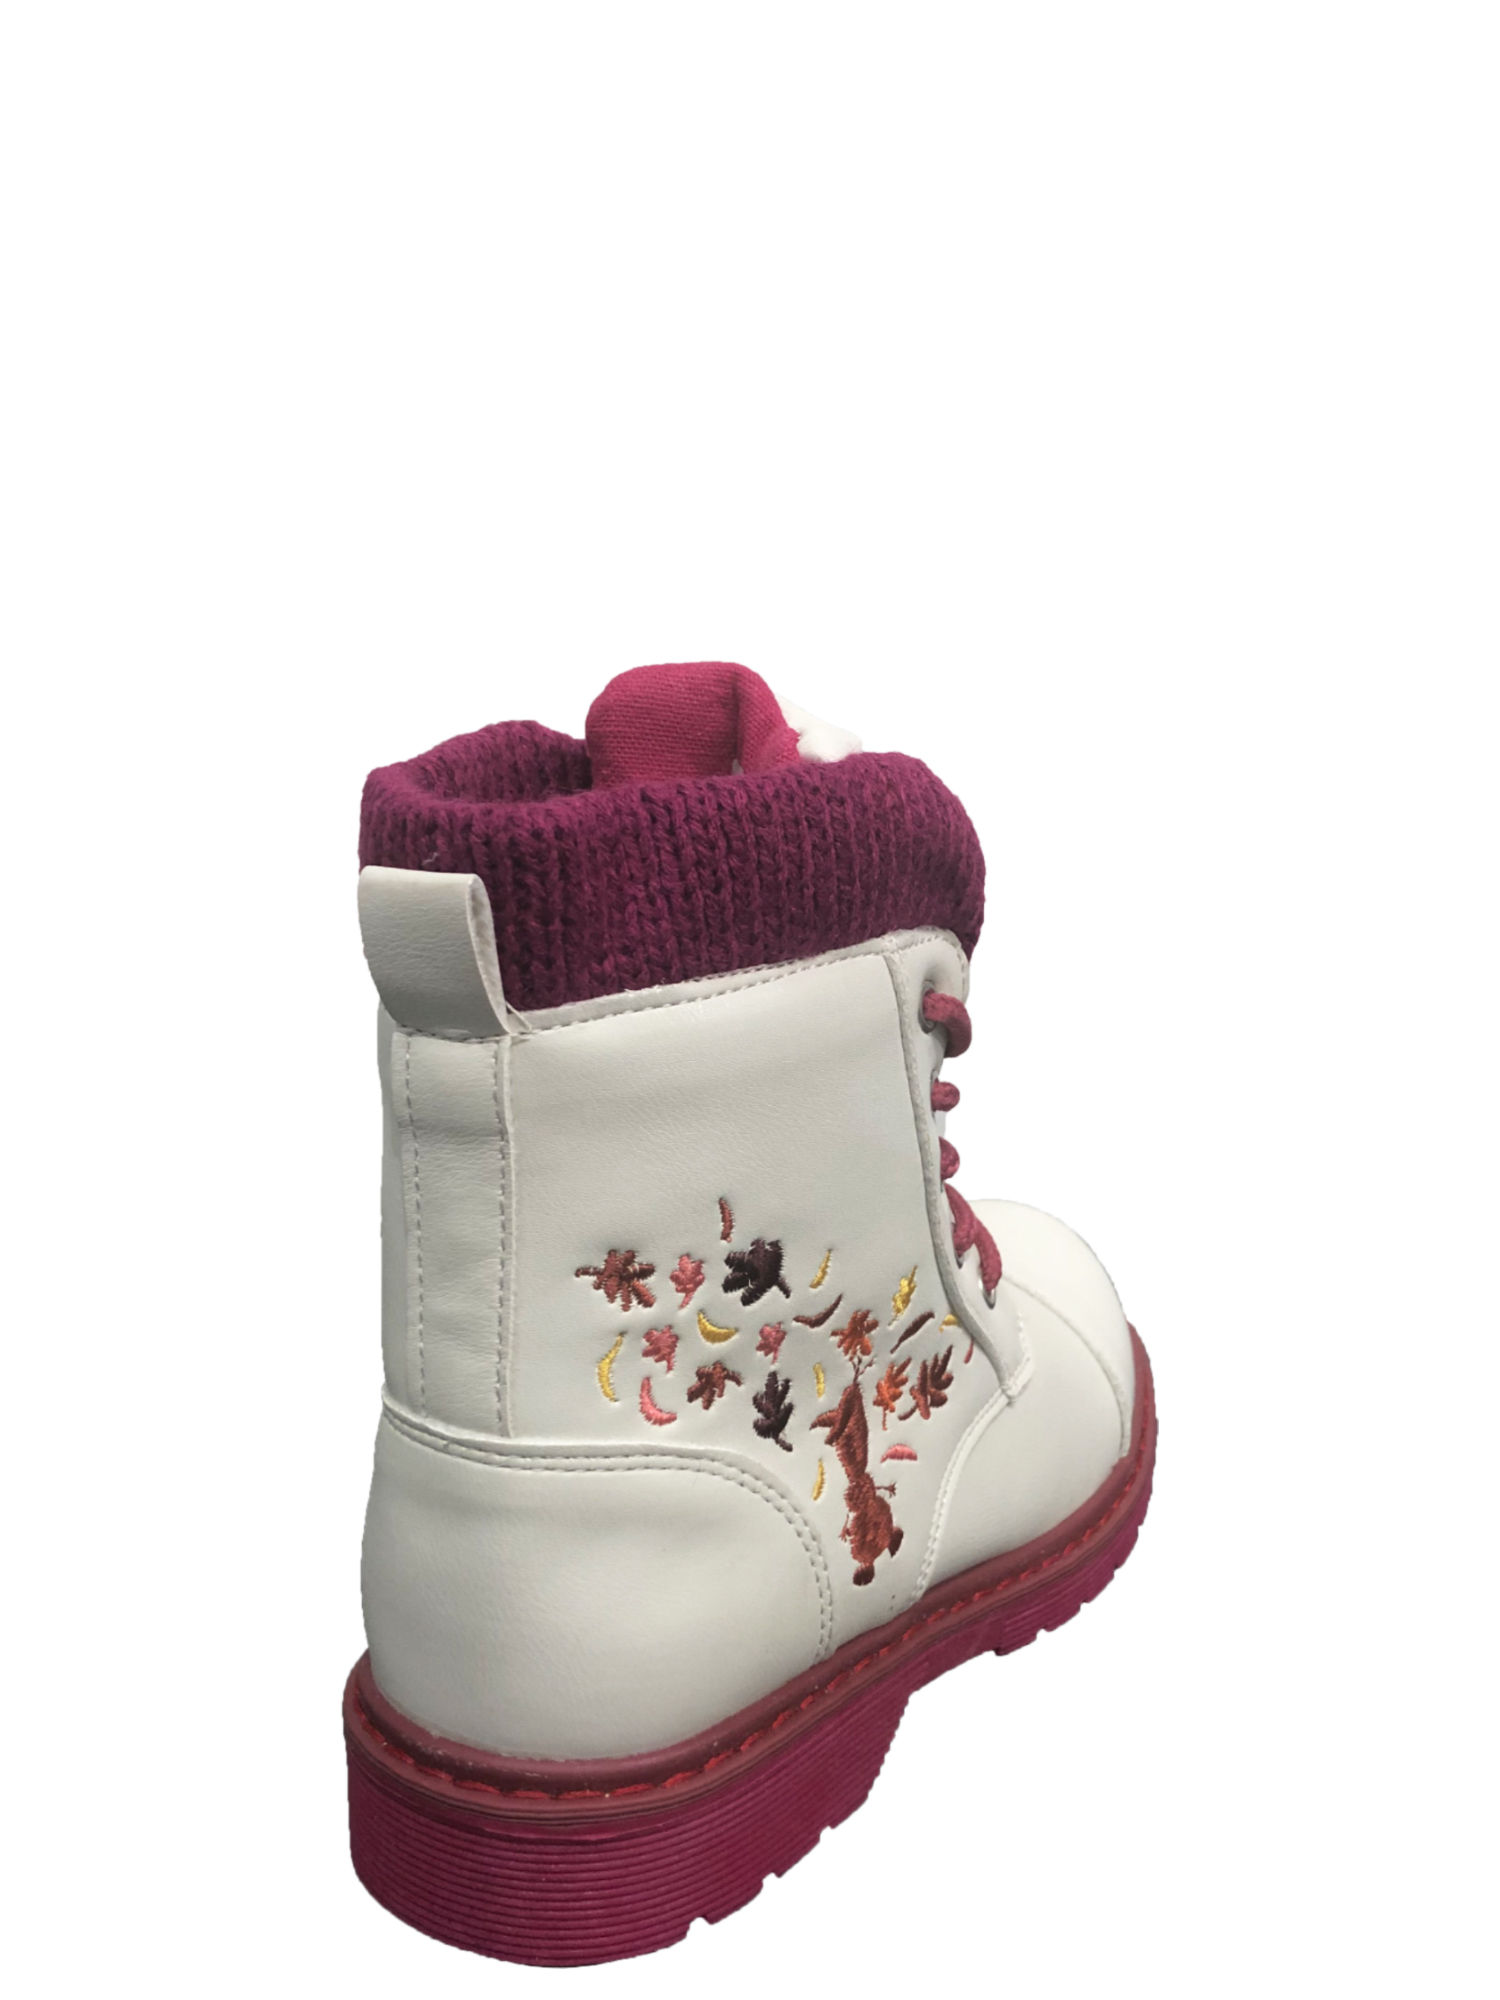 Disney Frozen 2 Olaf Combat Boots (Little Girls & Big Girls) - image 3 of 6